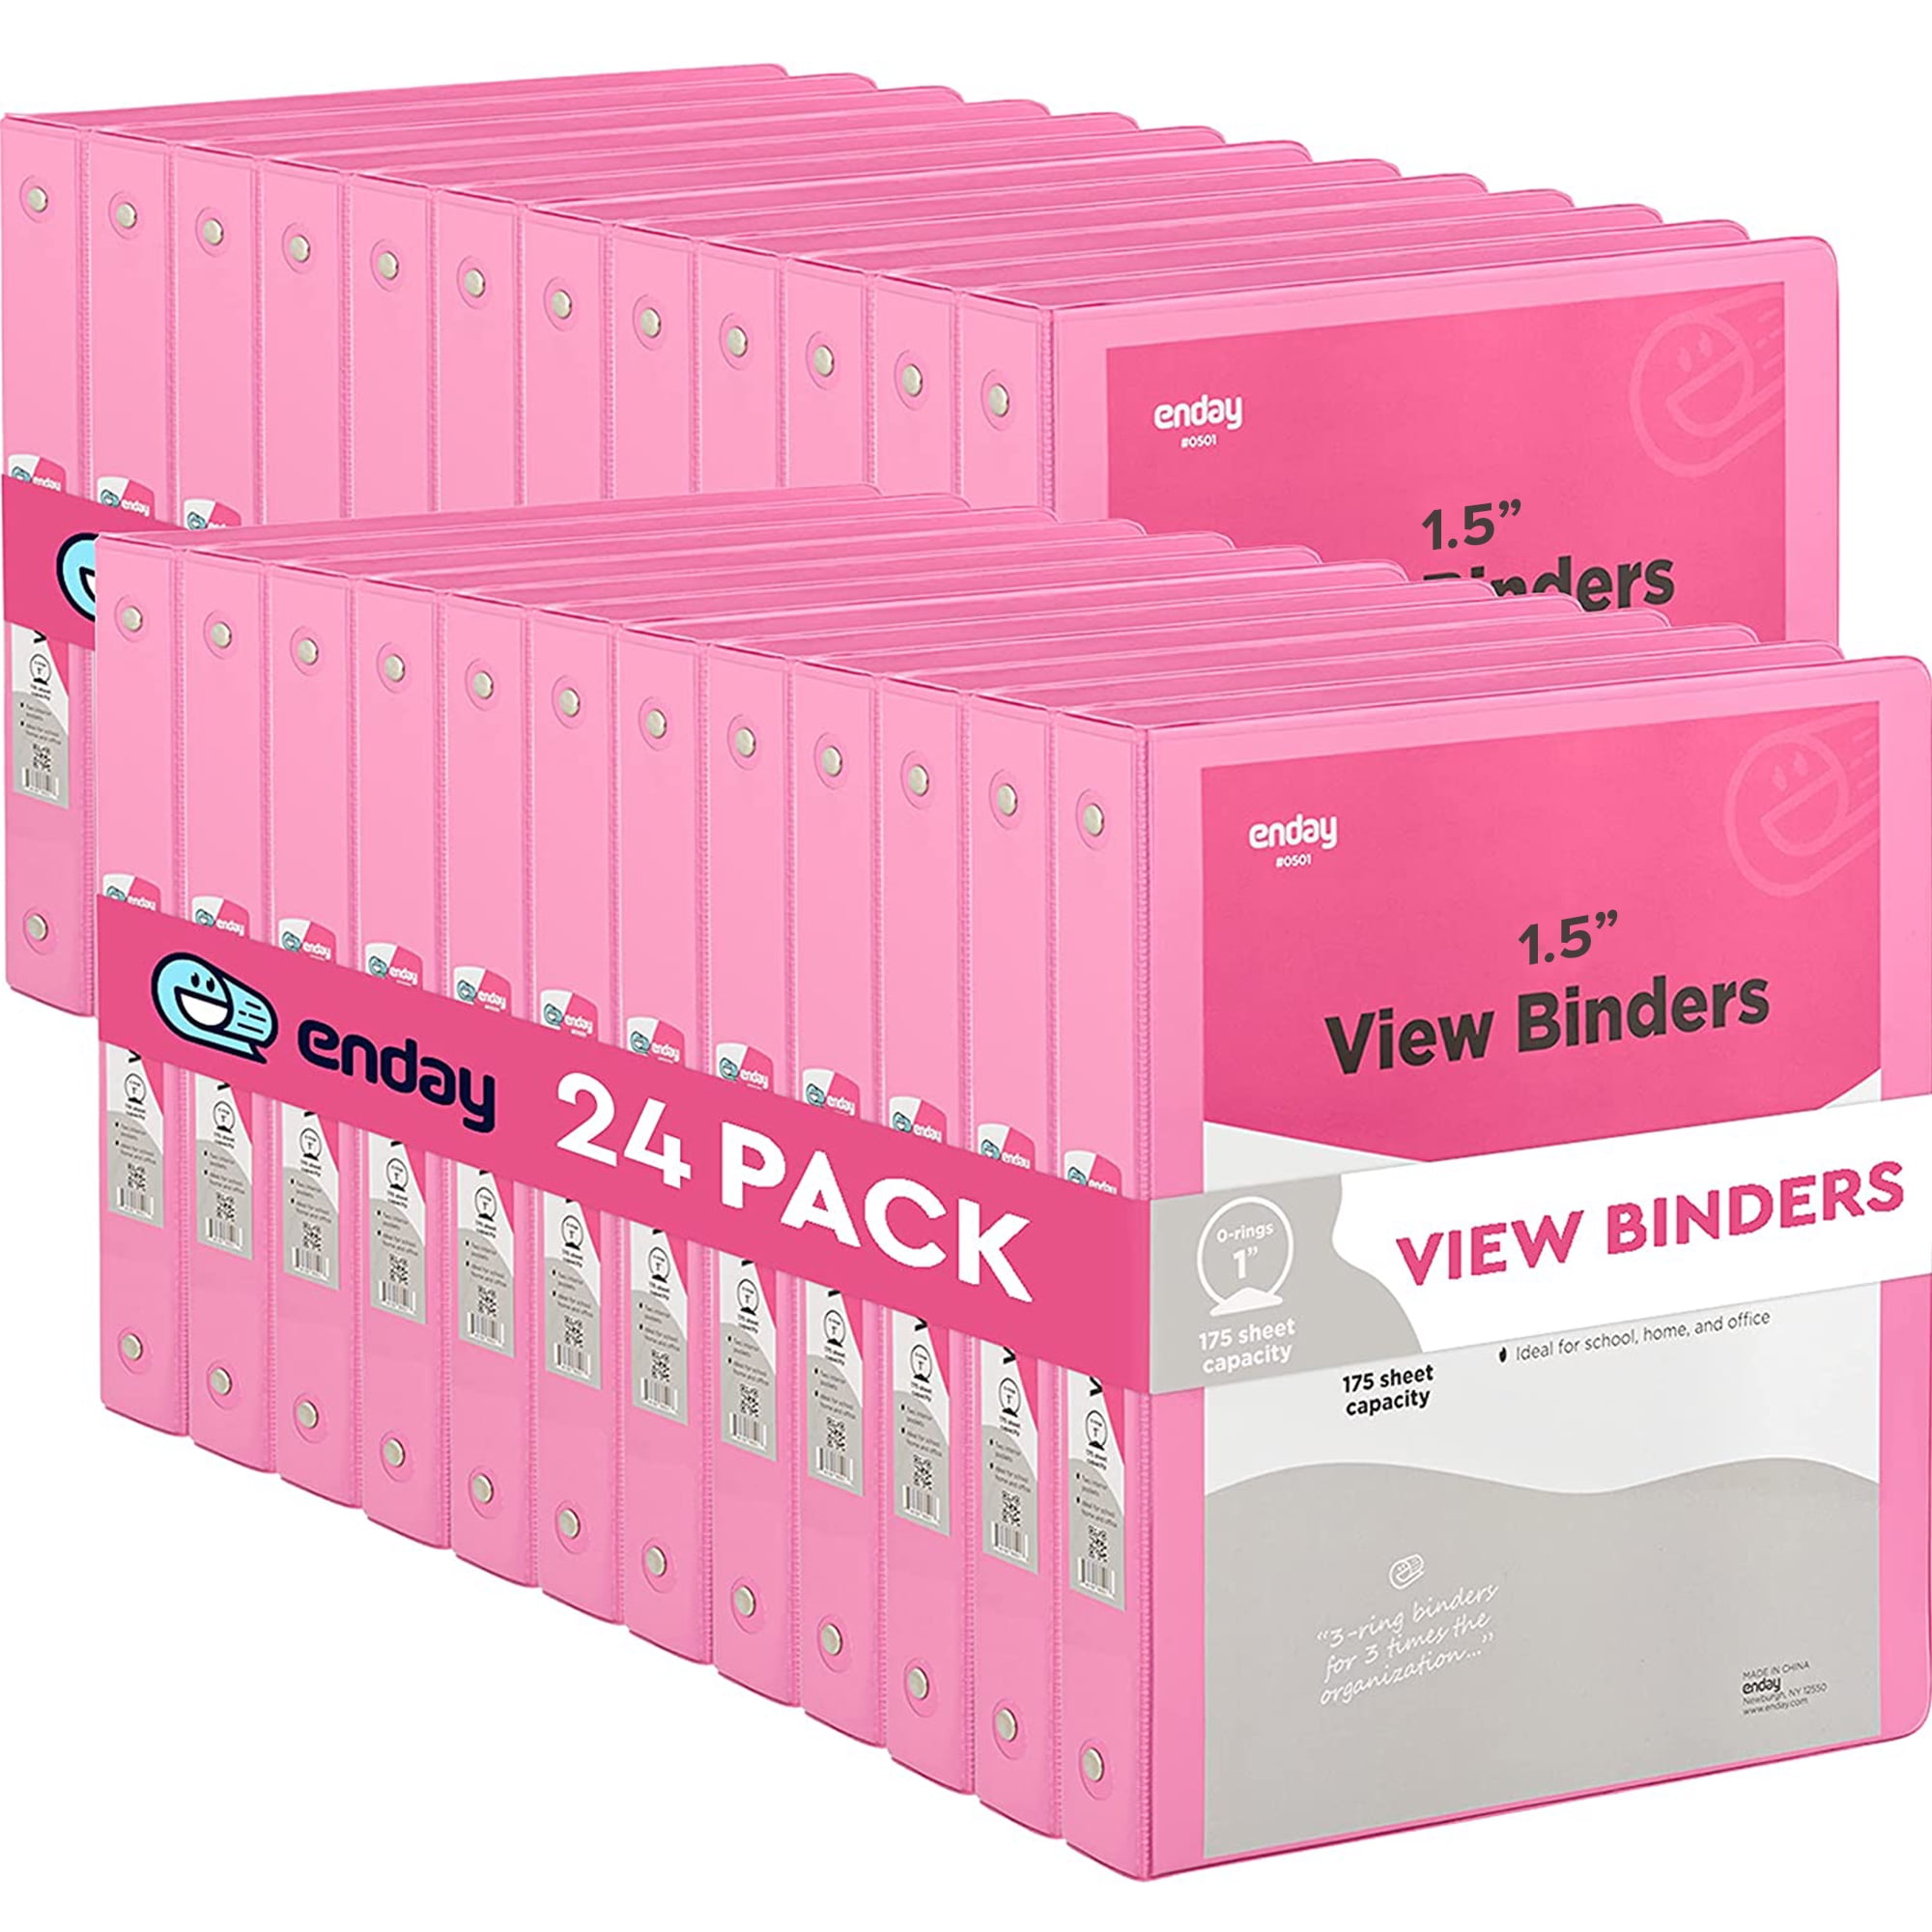 Enday Multi-Purpose 3 x 5 Card File Box, Pink